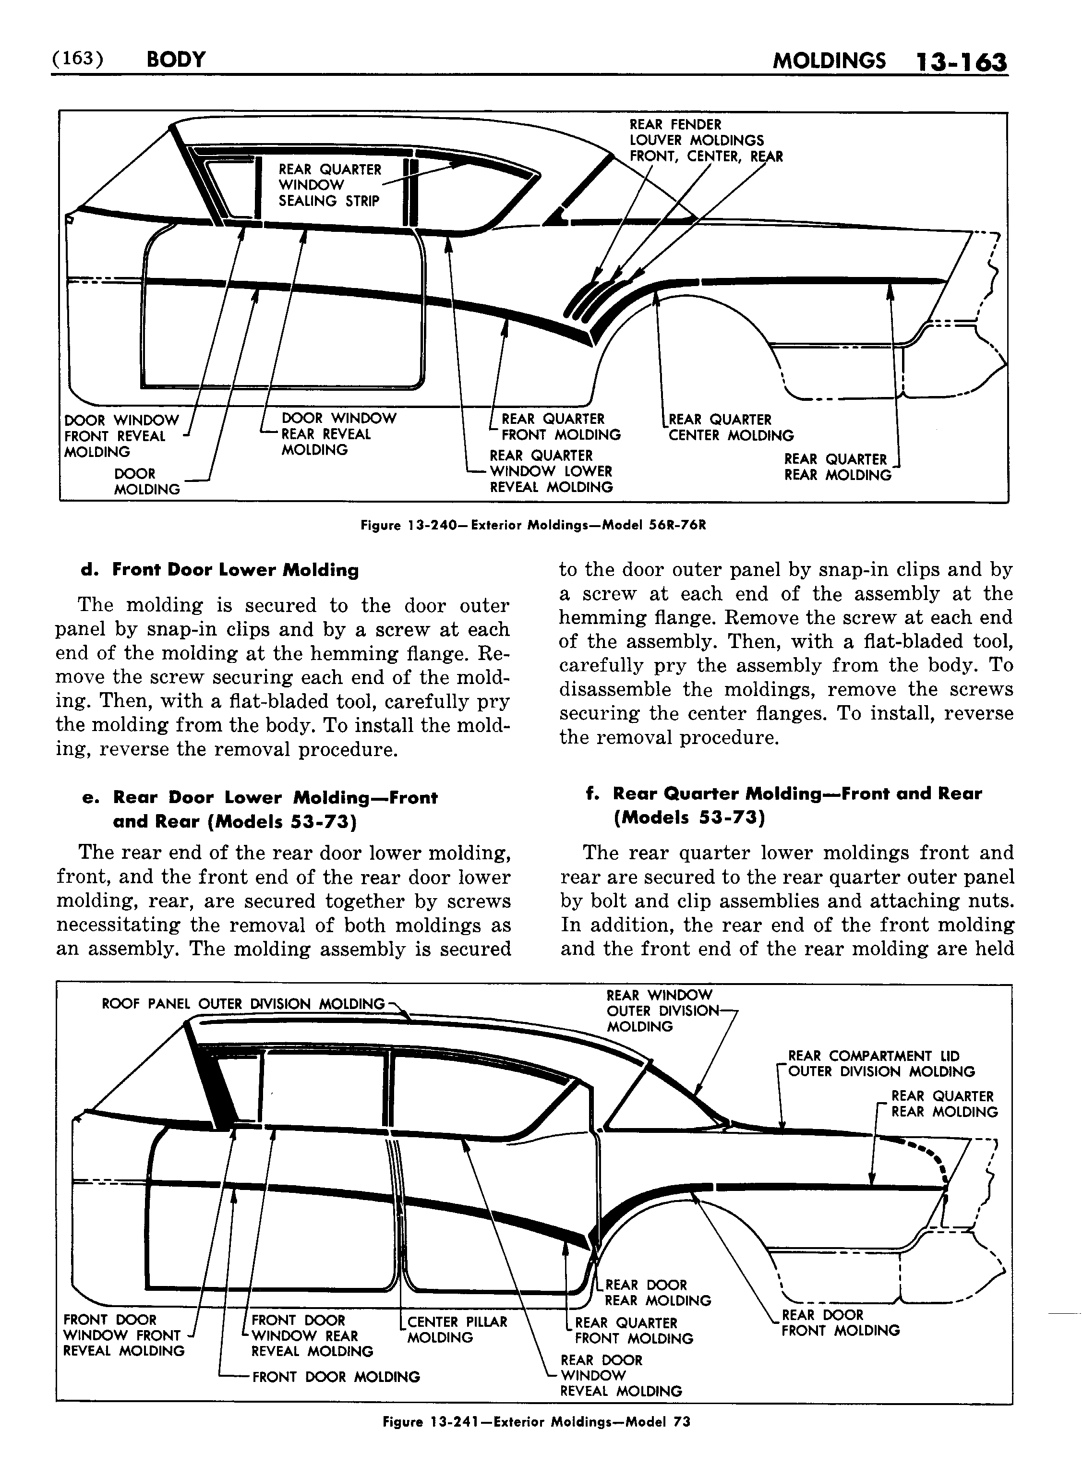 n_1957 Buick Body Service Manual-165-165.jpg